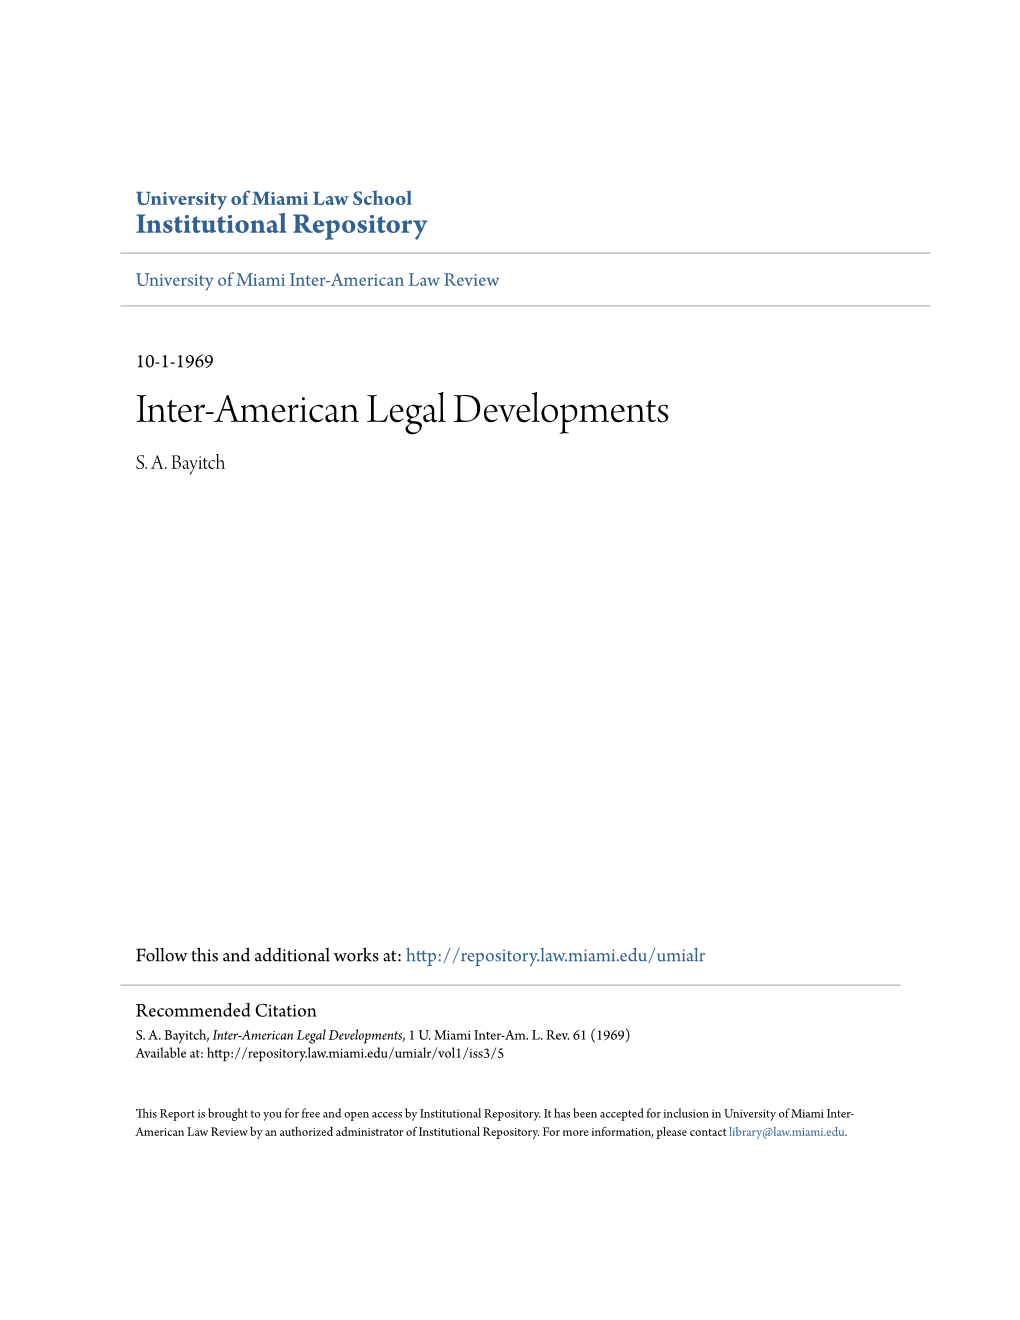 Inter-American Legal Developments S